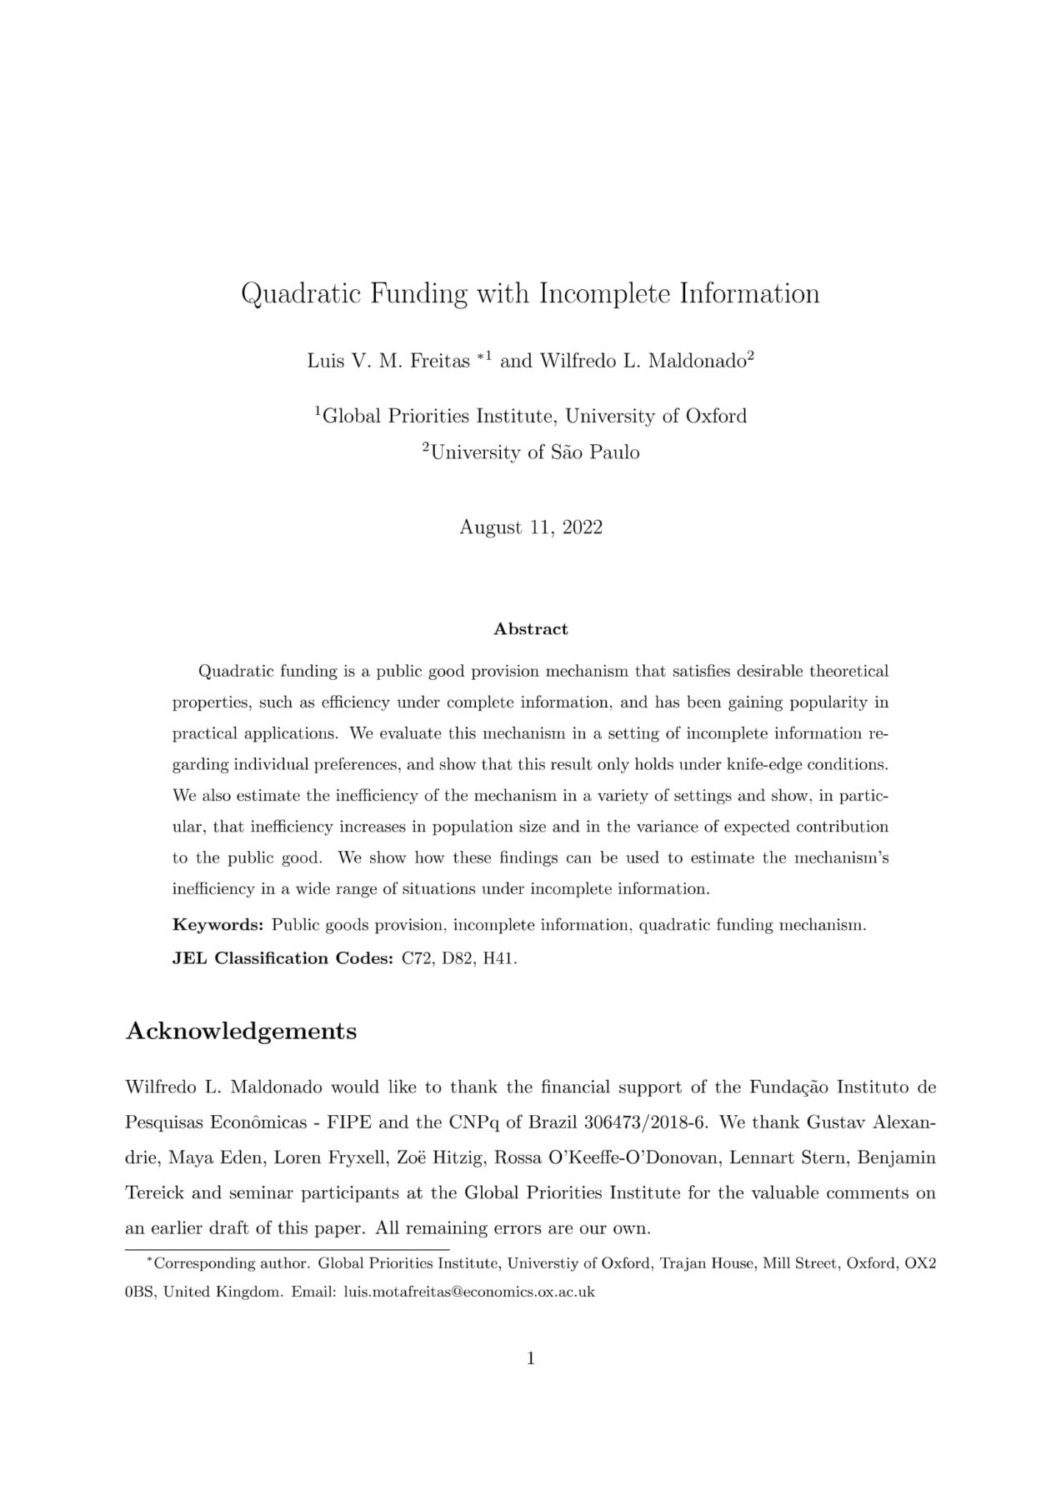 Luis Mota Wildredo Maldonado - Quadratic Funding with Incomplete Information-1